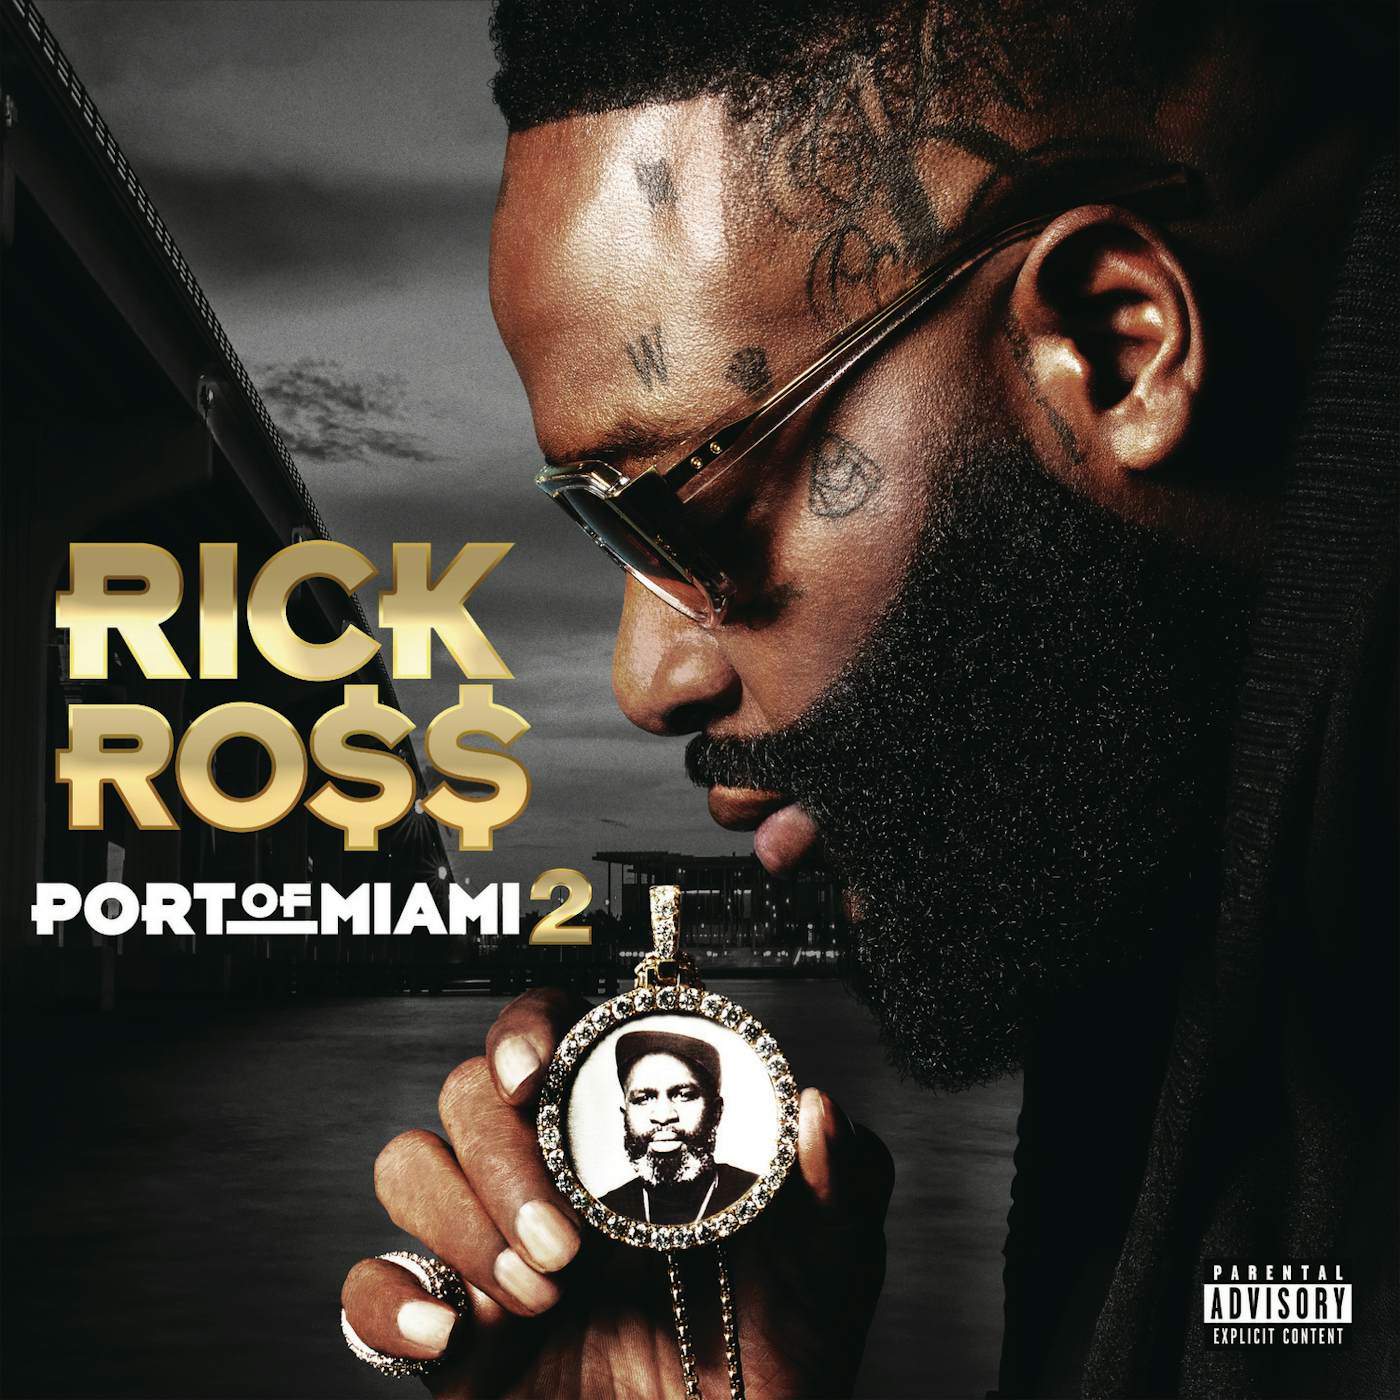 Rick Ross Port of Miami 2 Vinyl Record